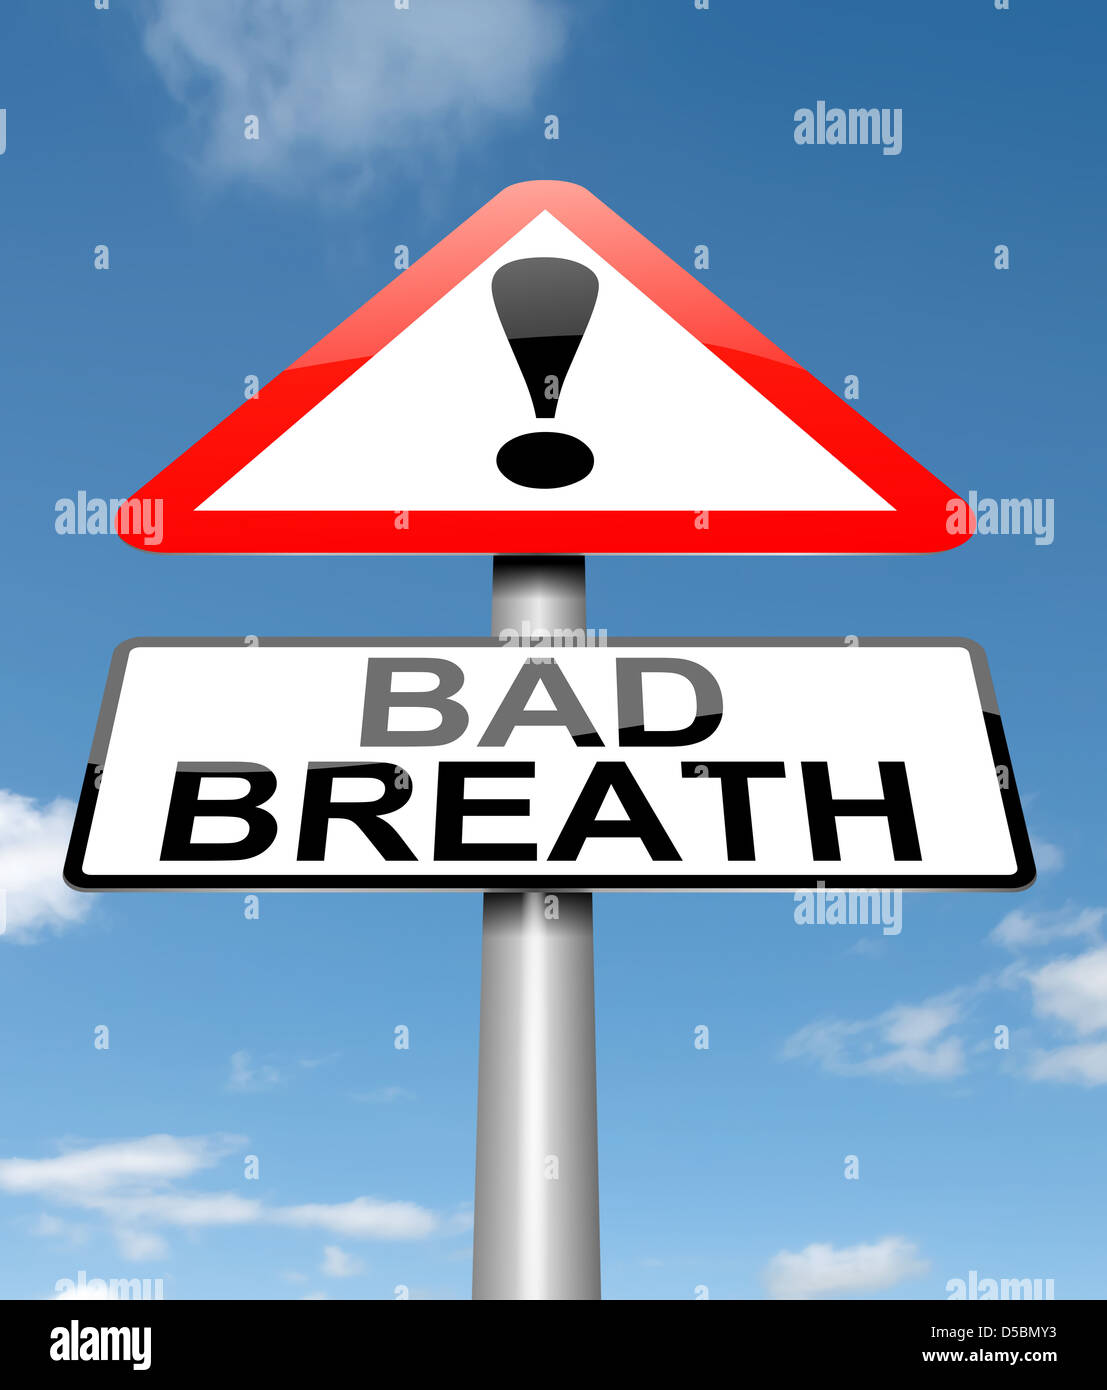 Bad breath. Stock Photo